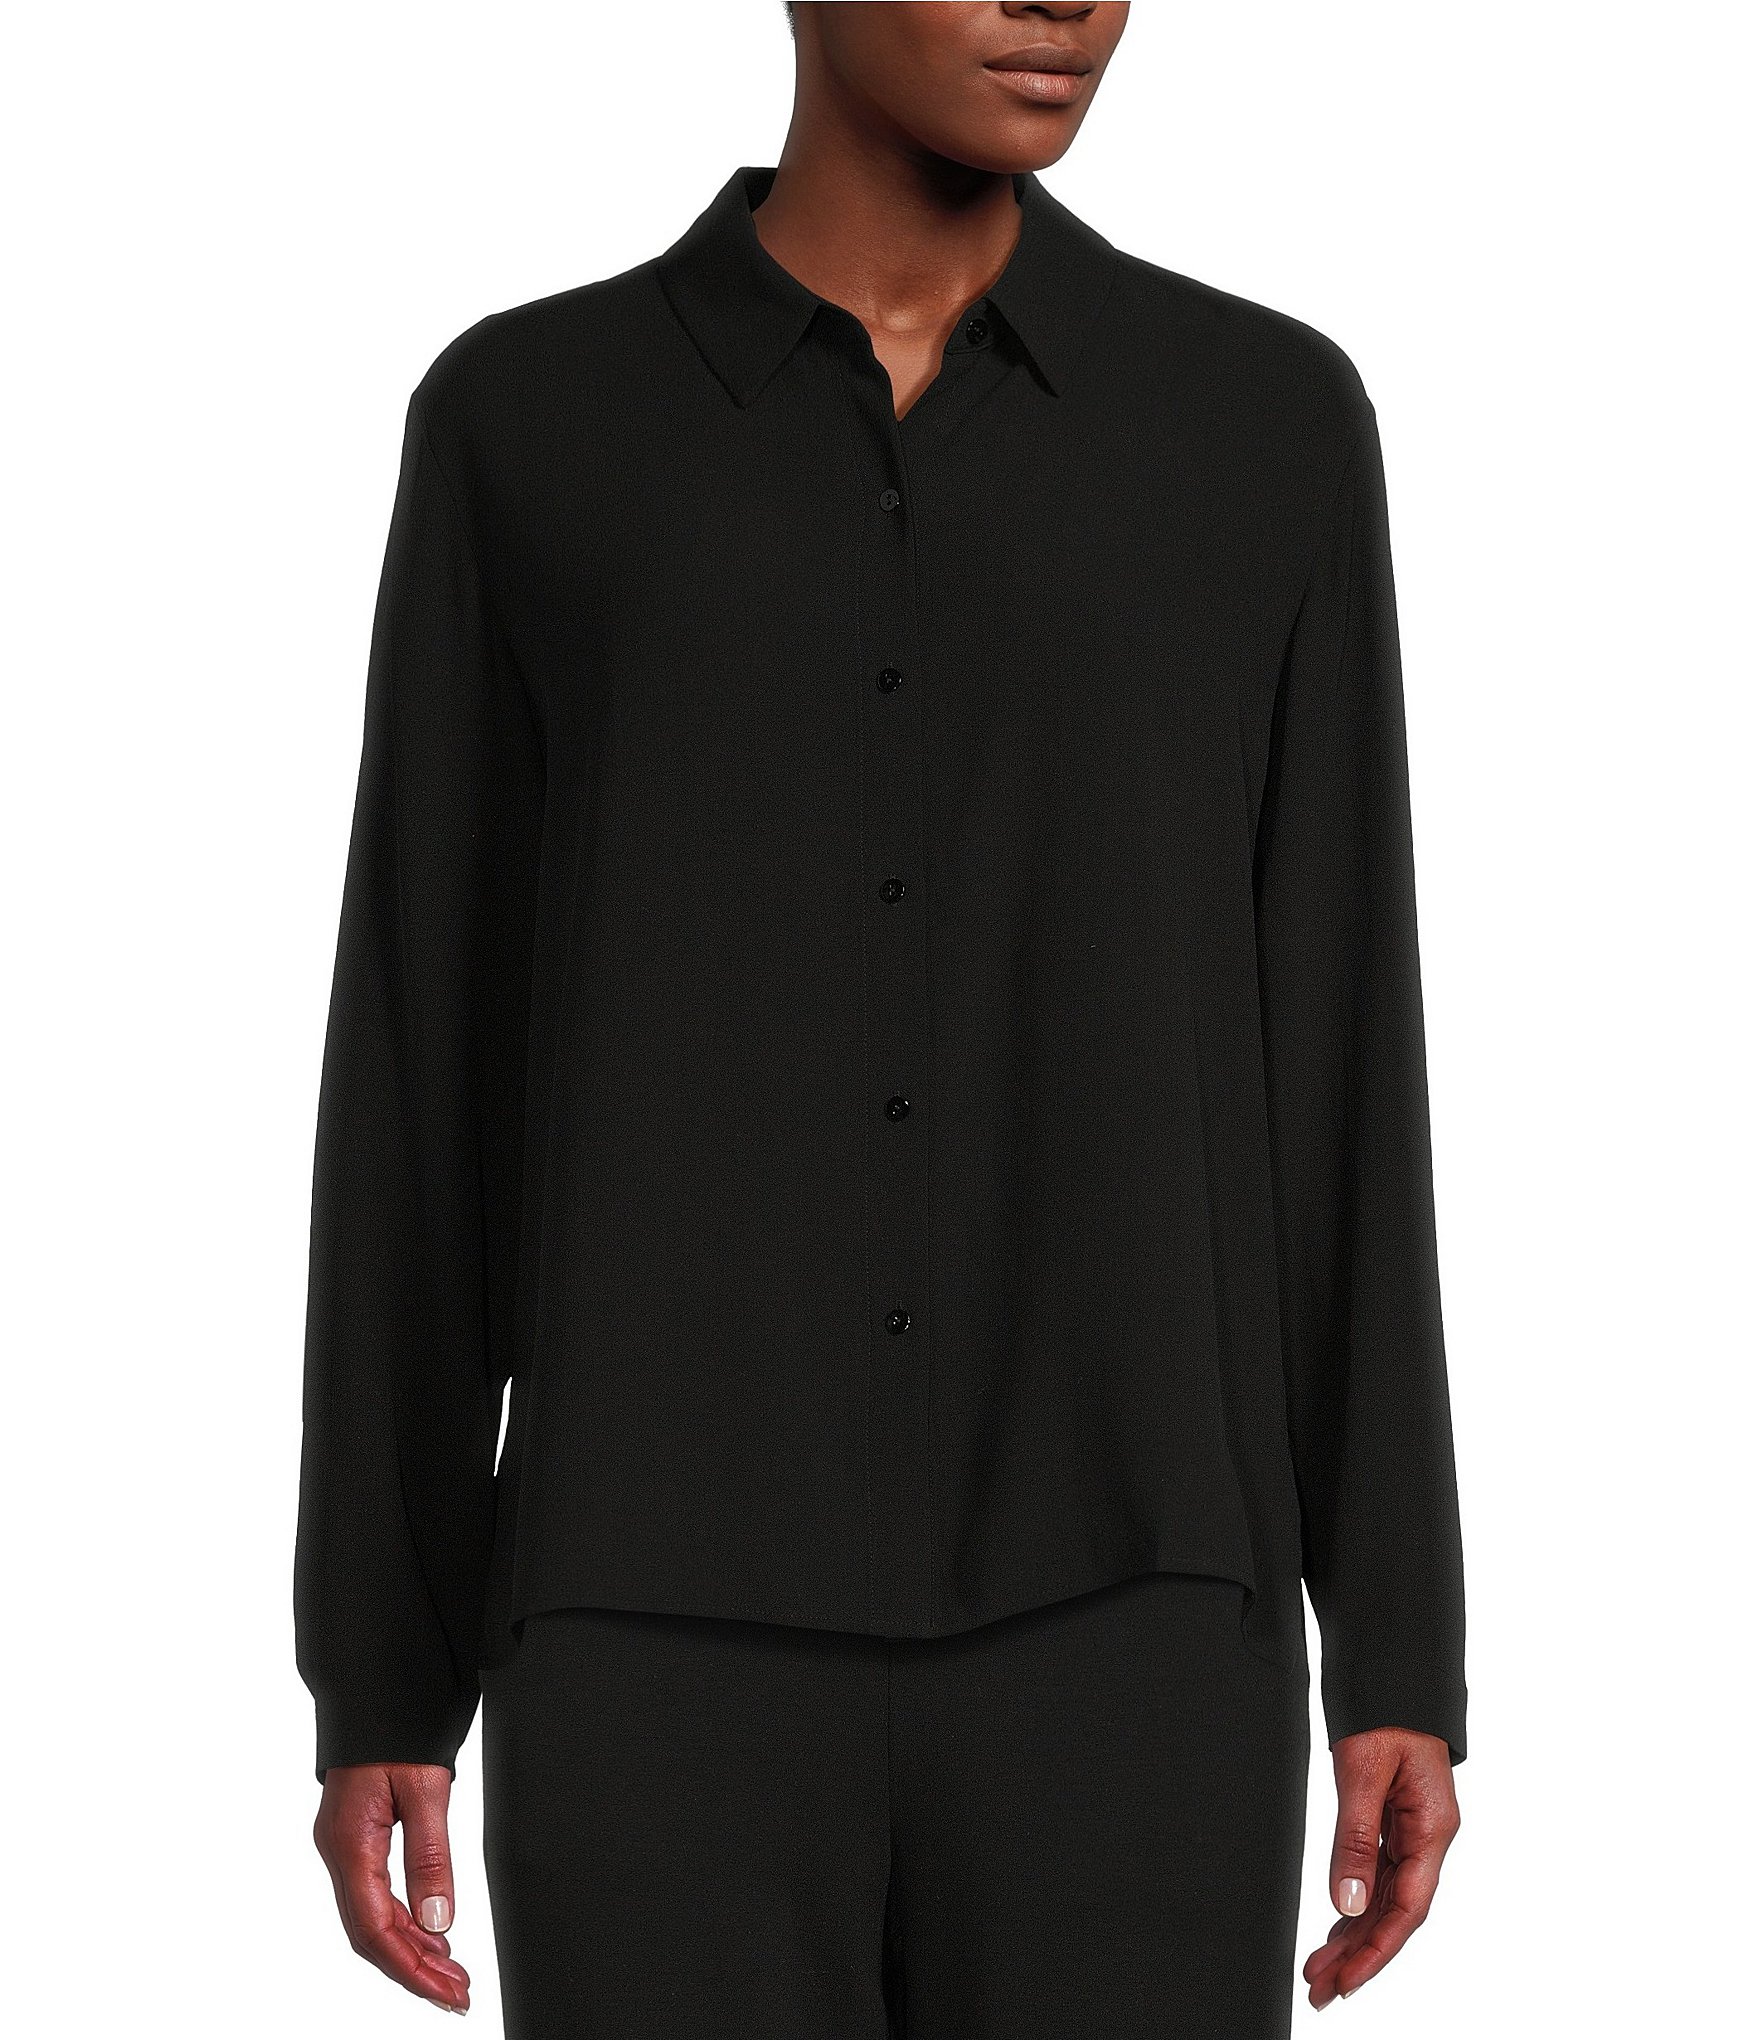 long black shirt: Women's Tops & Dressy Tops | Dillard's